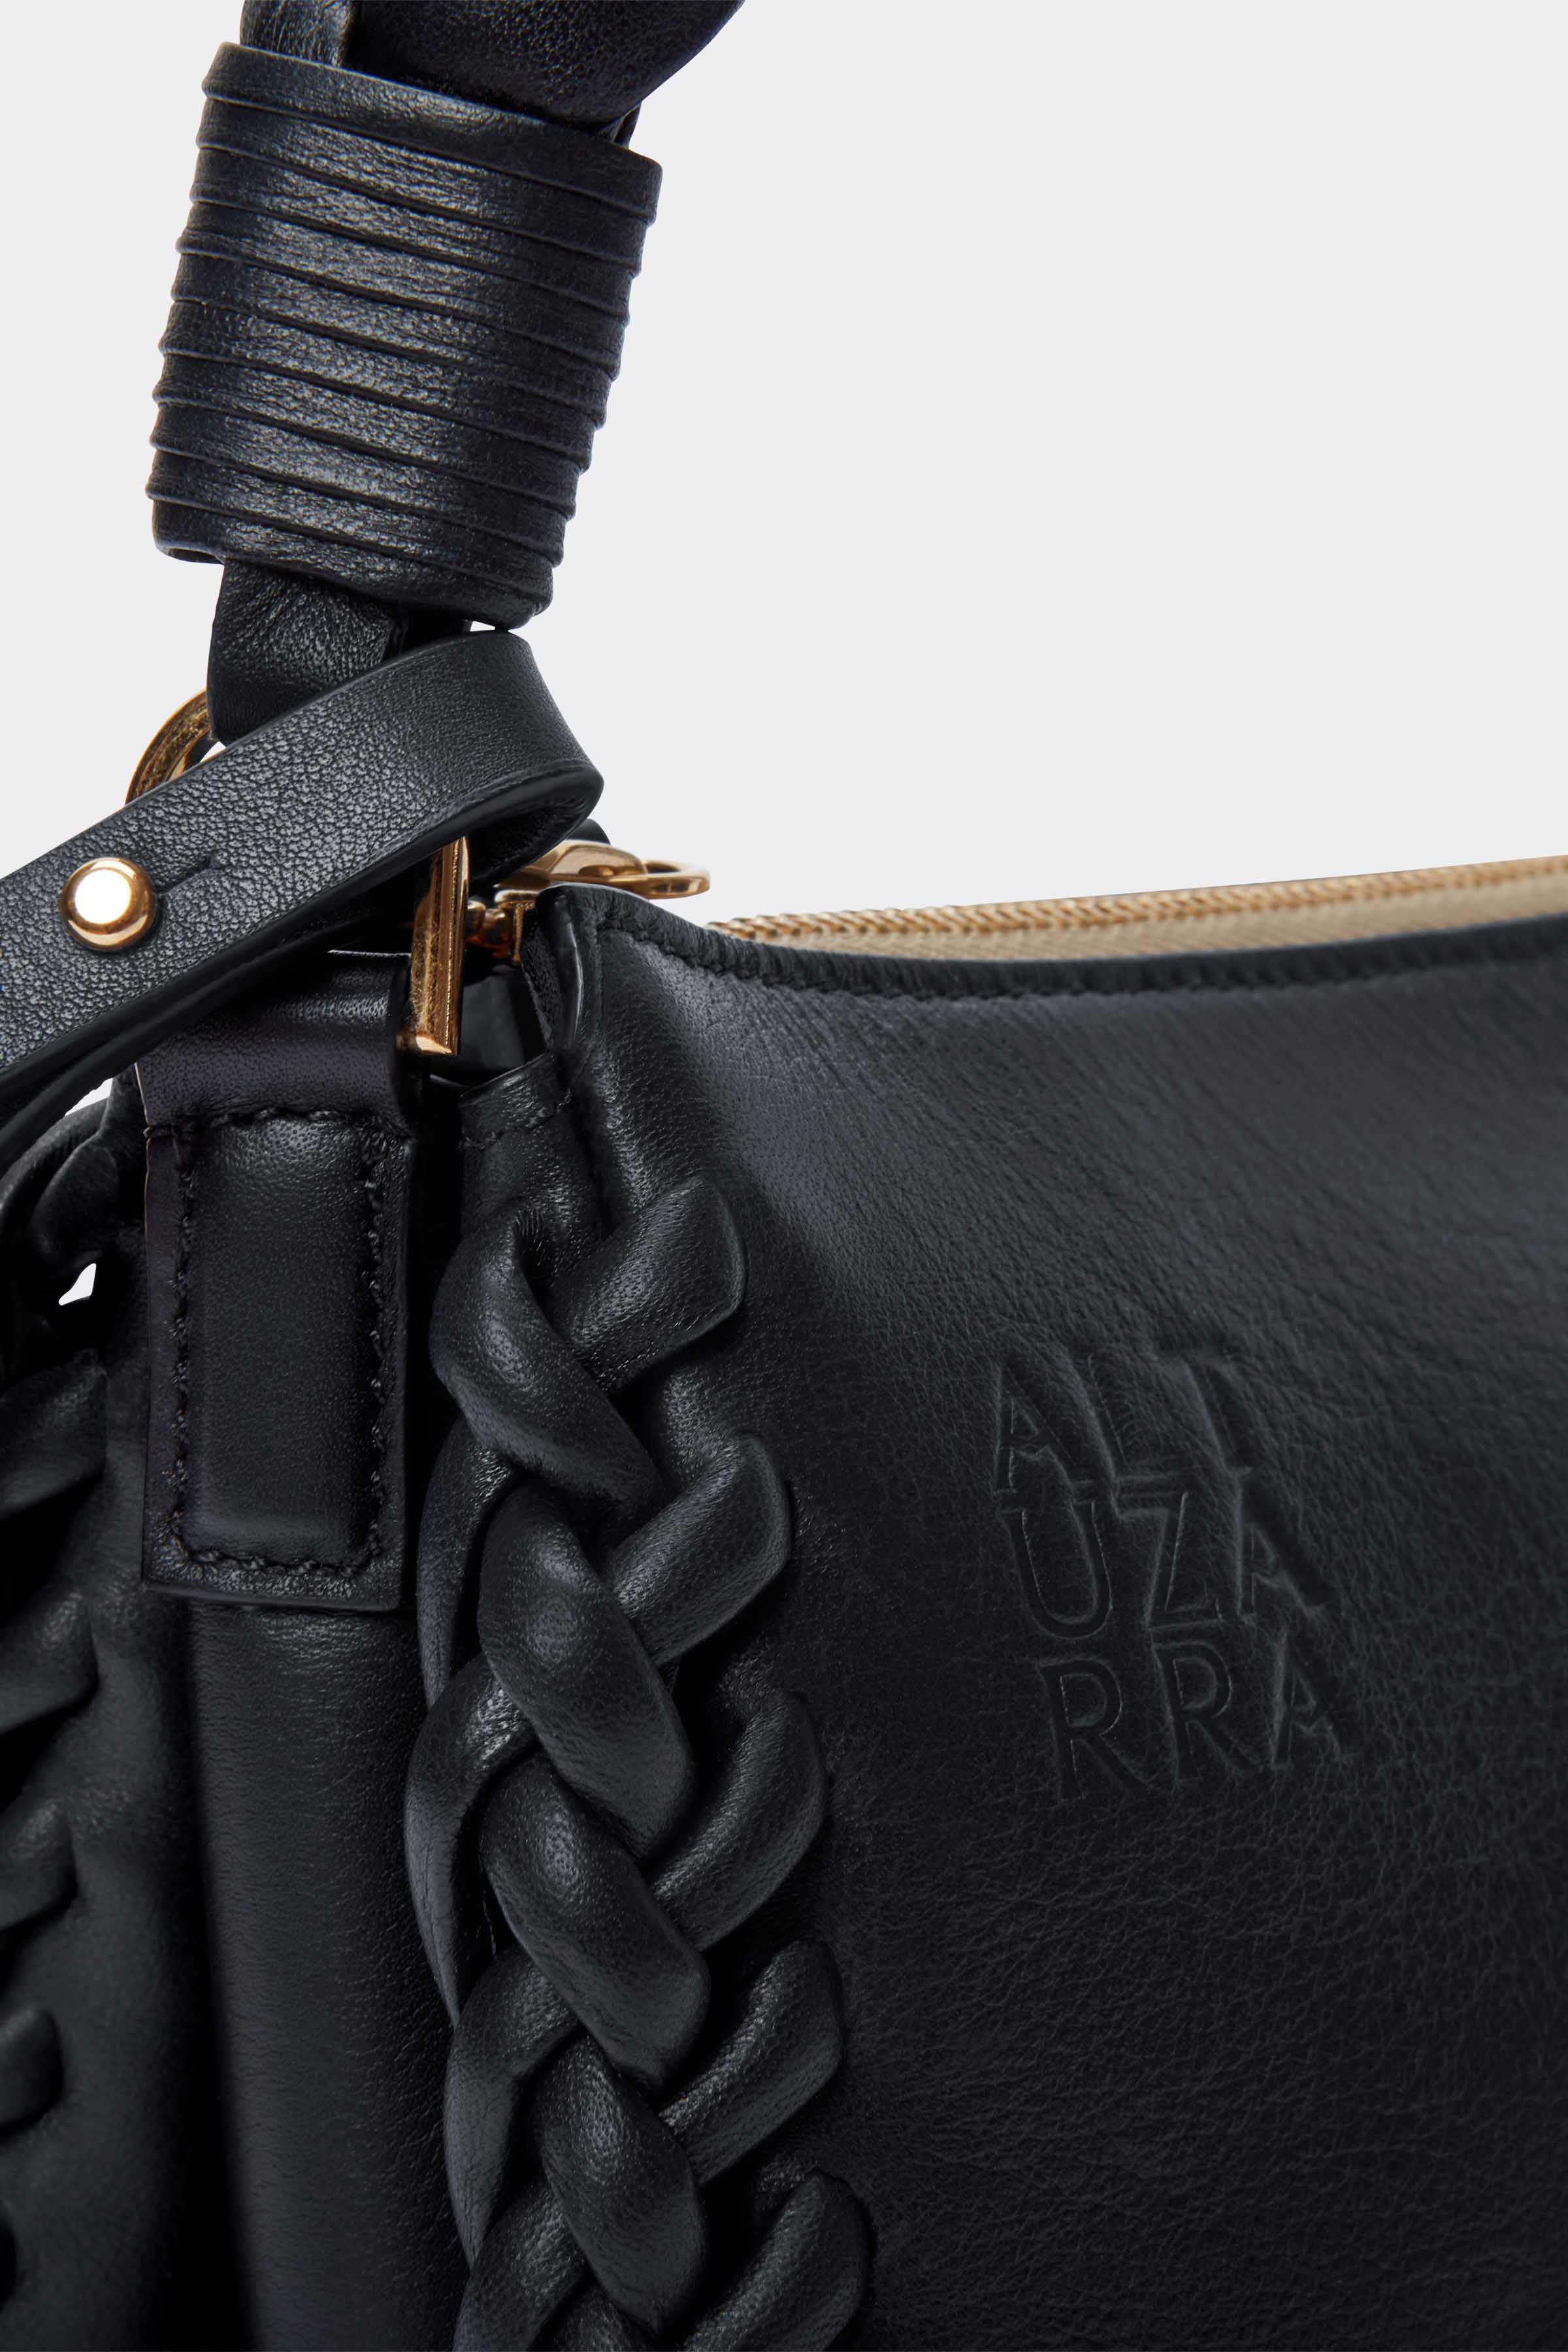 Altuzarra Small Braided Leather Top-Handle Bag